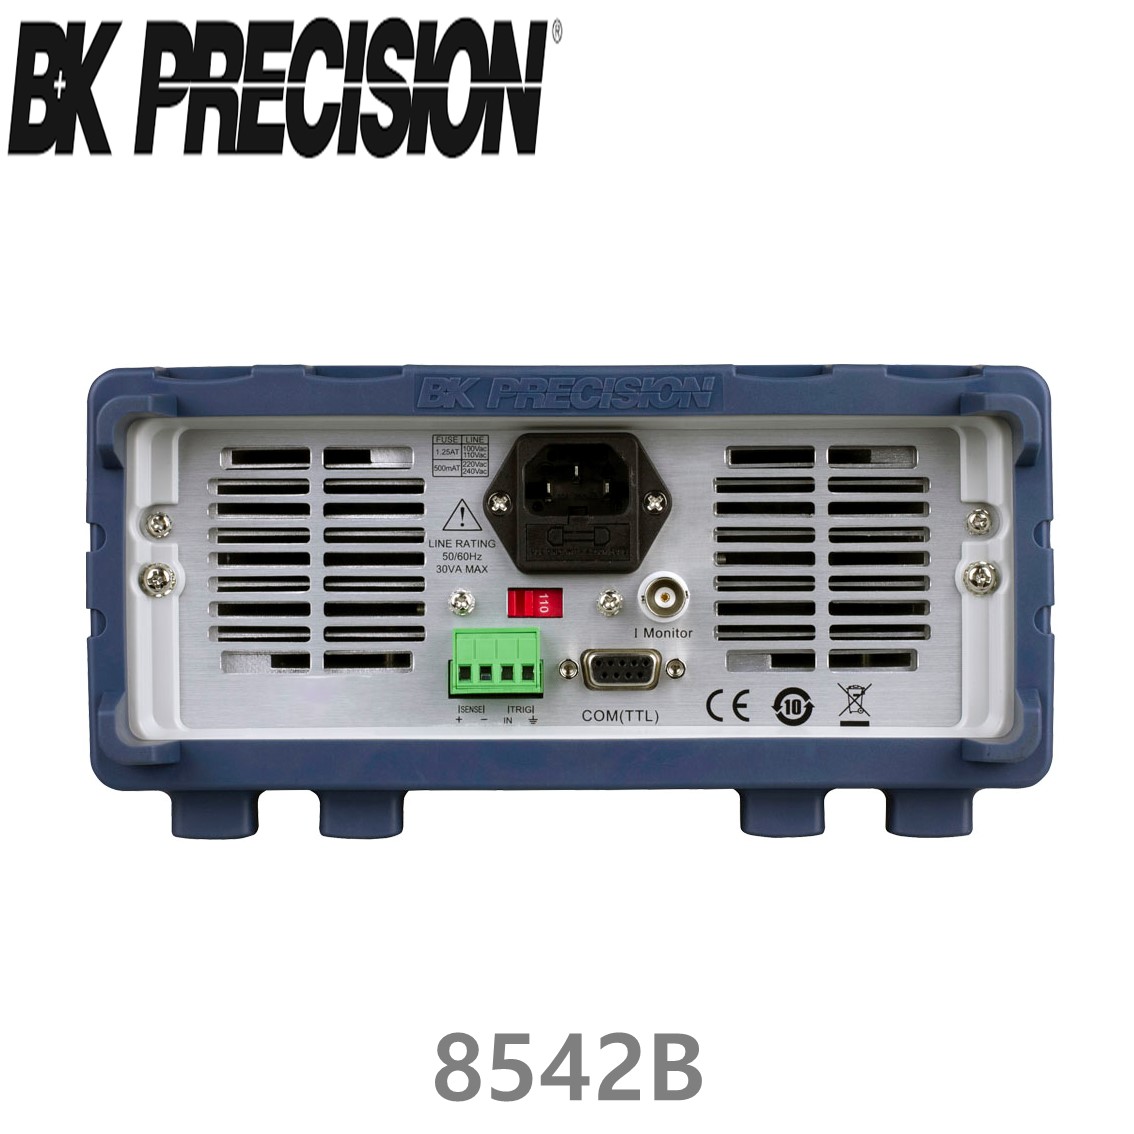 [ BK PRECISION ] BK 8542B 150V/30A, 150W, DC전자부하기 B&K 8542B